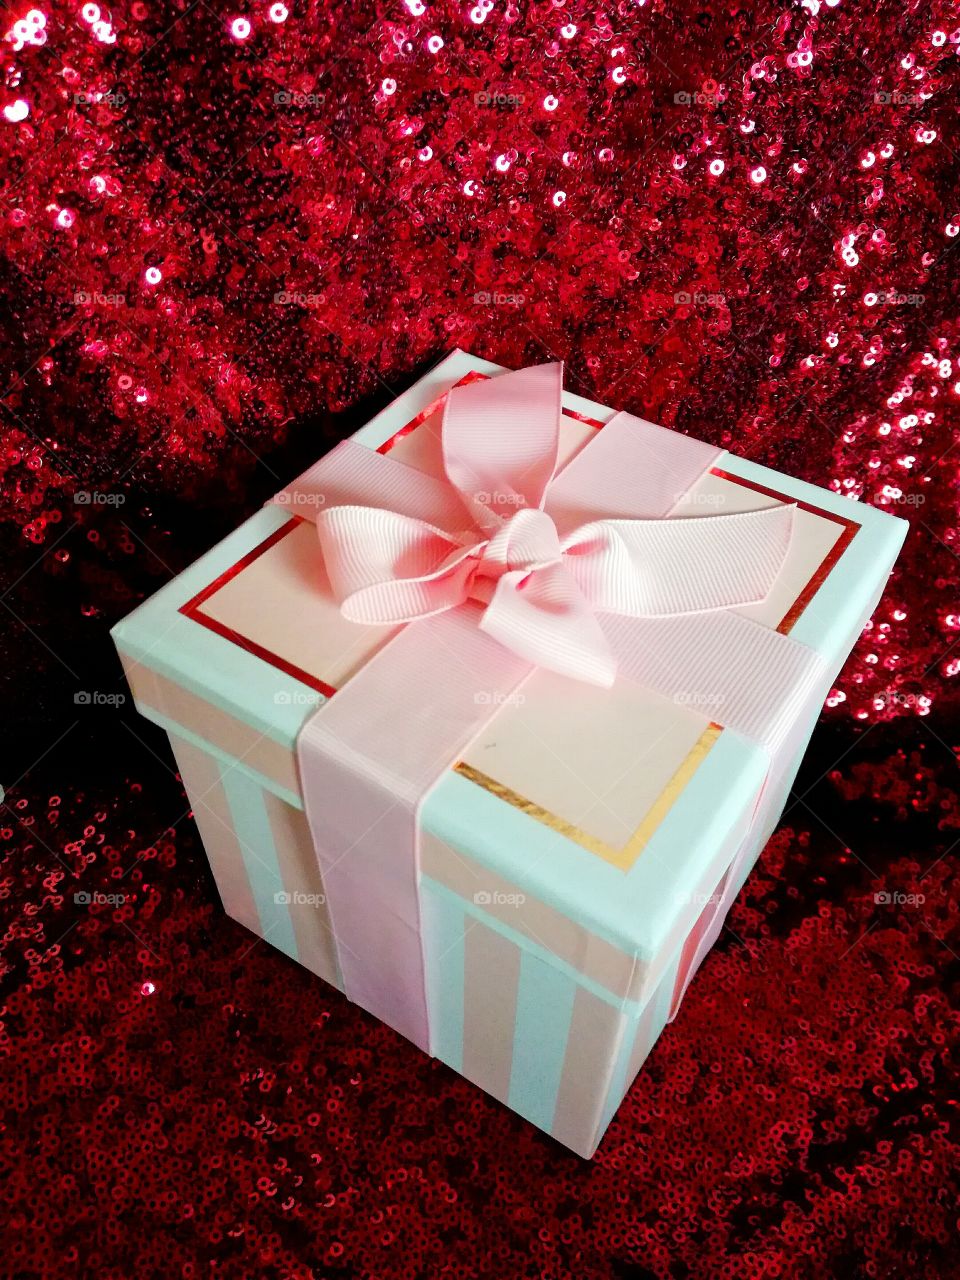 Close-up of a gift box